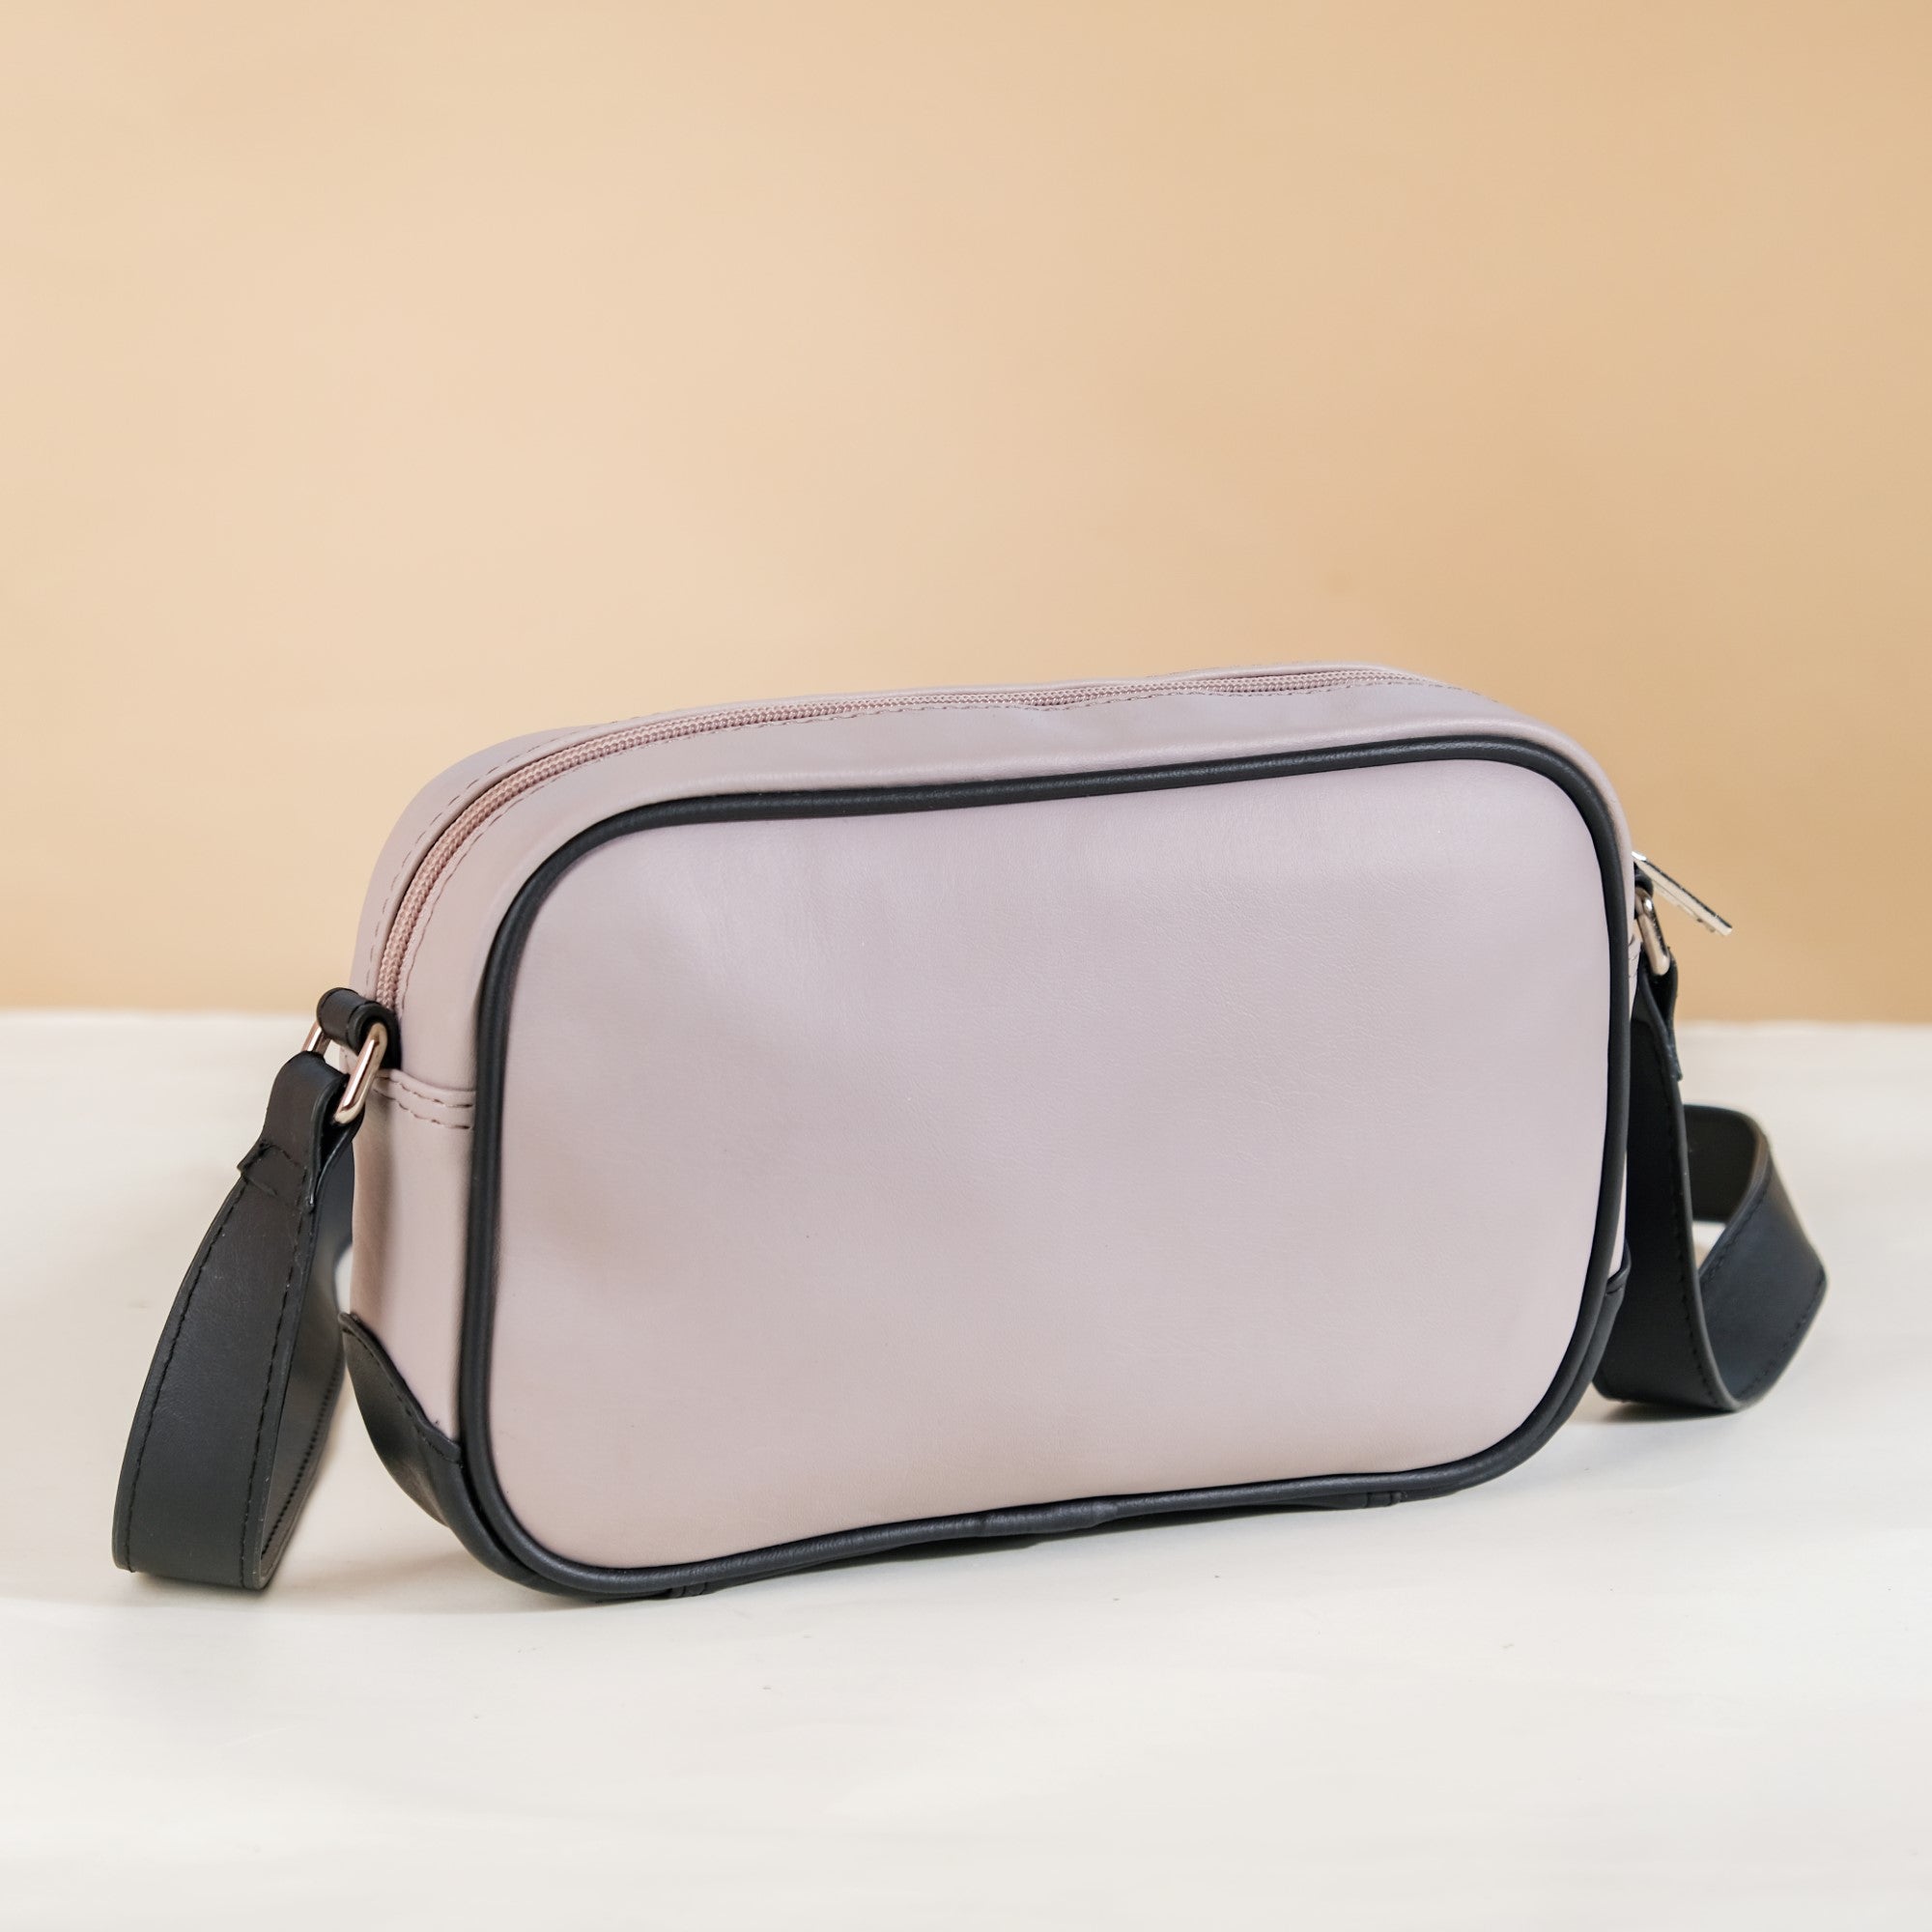 Buy DOURR Hobo Handbags Canvas Crossbody Bag for Women, Multi Compartment Tote  Purse Bags, Beige - Medium, Medium at Amazon.in